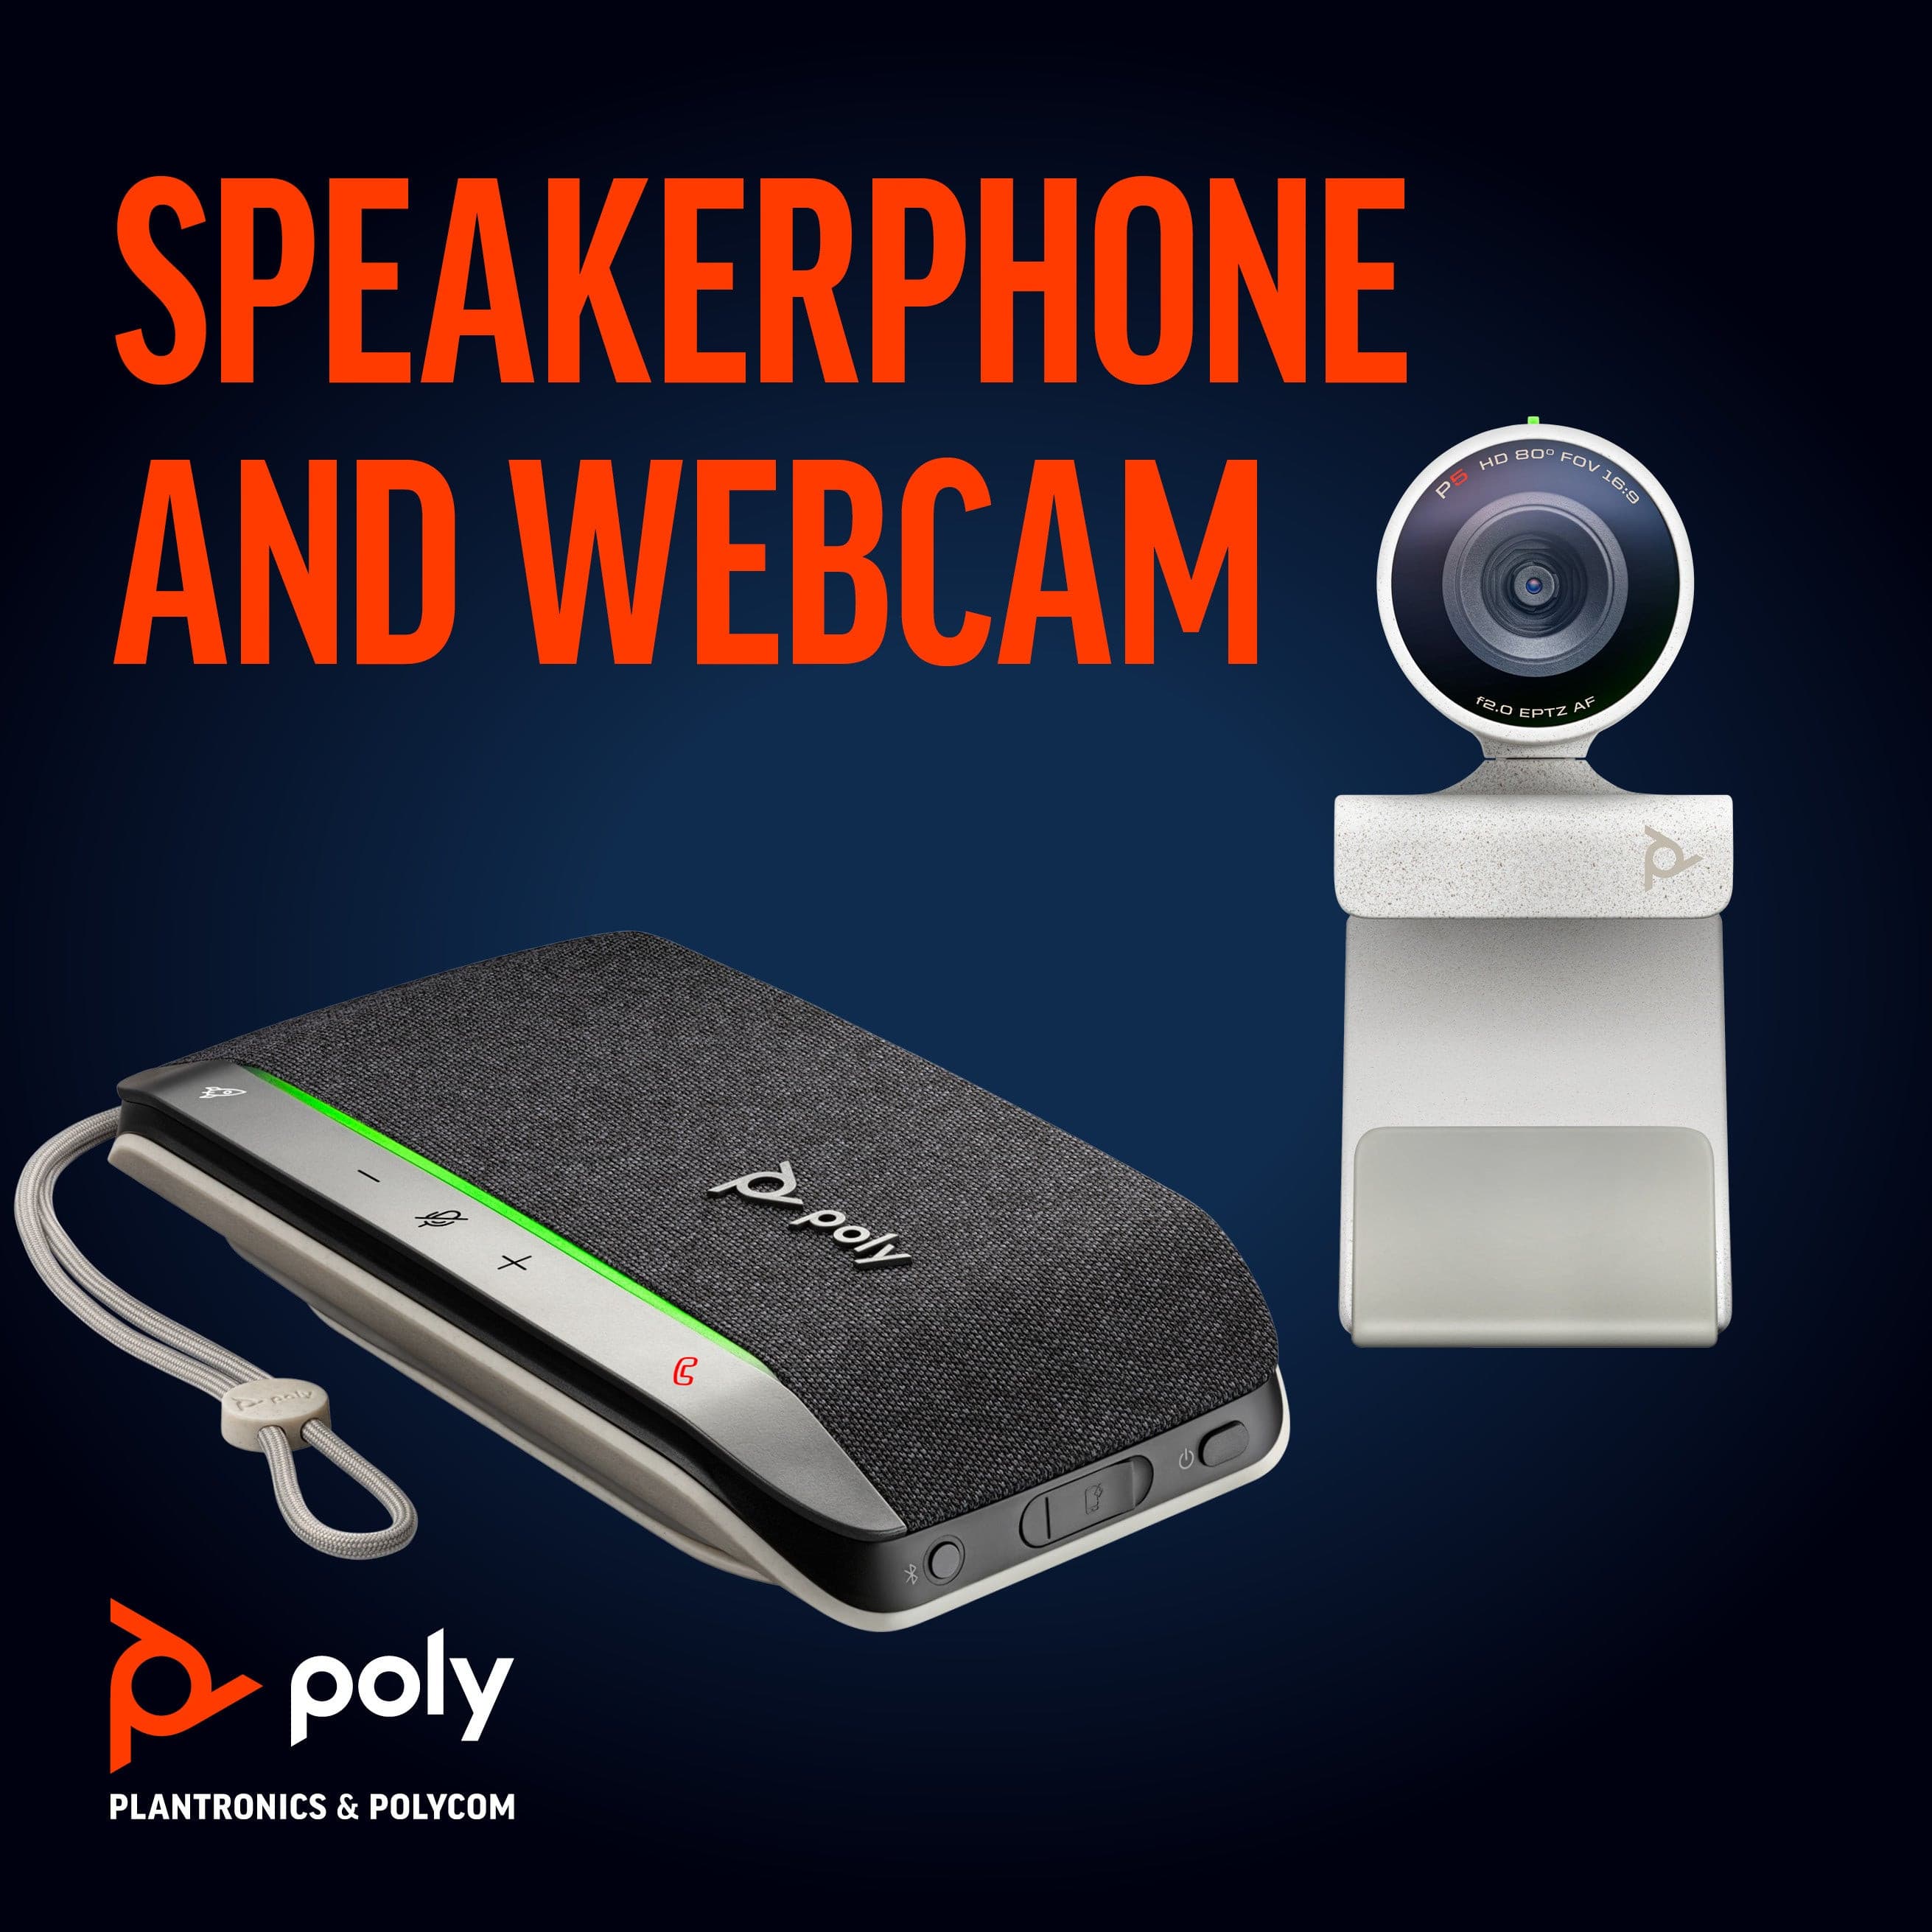 Poly Studio P5 Webcam Kit with Sync 20+ MS Teams USB-A BT600 Adapter Smart Speakerphone Bundle.